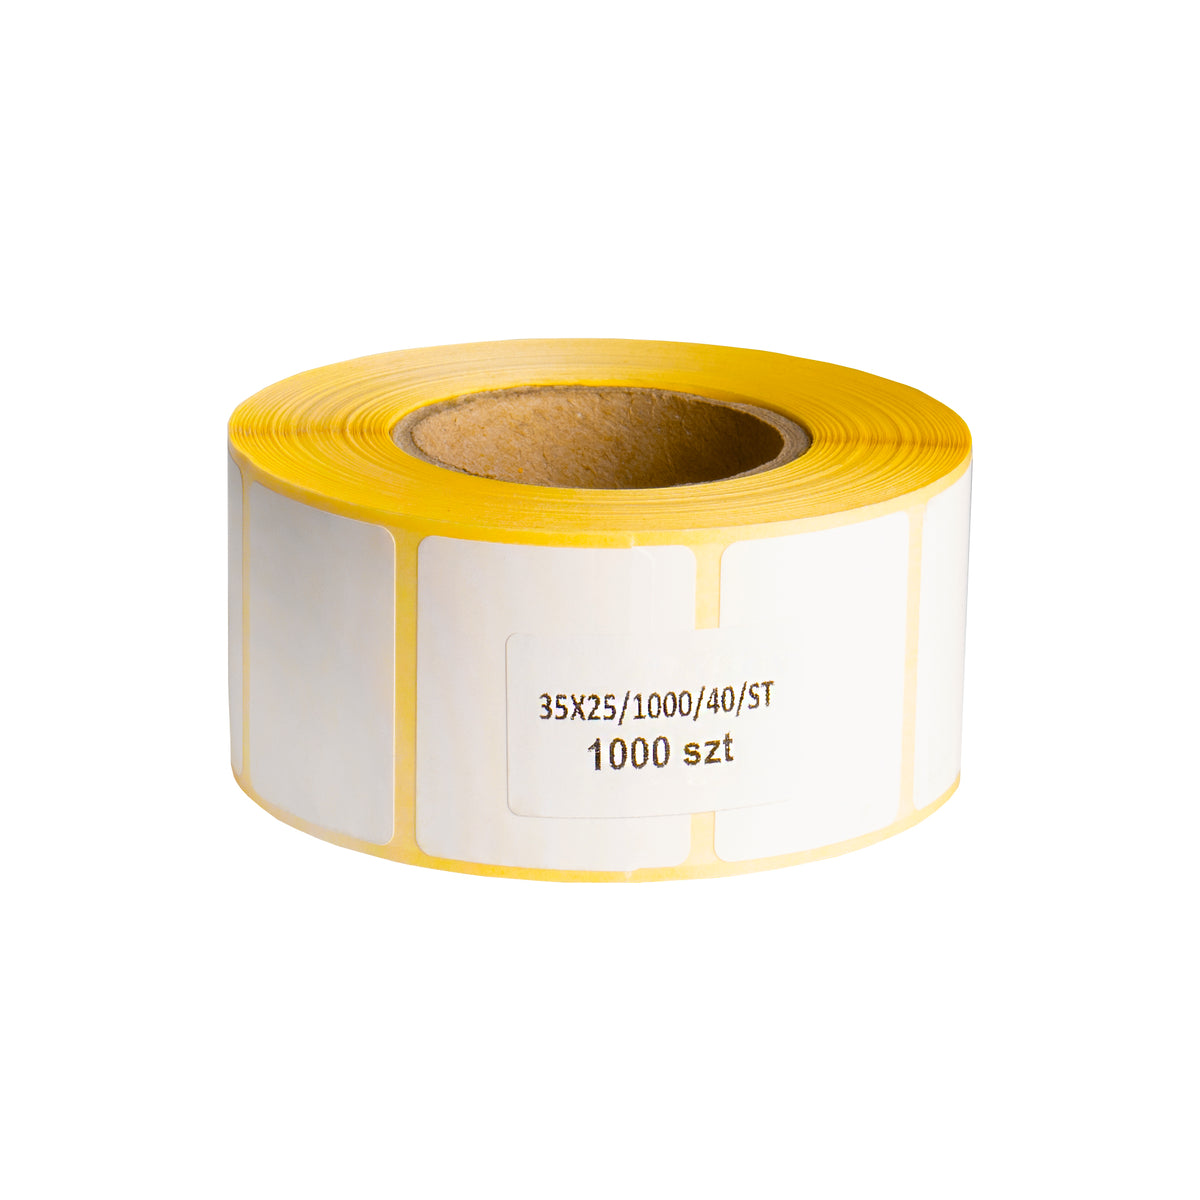 Thermal labels 35x25mm 1000 per roll